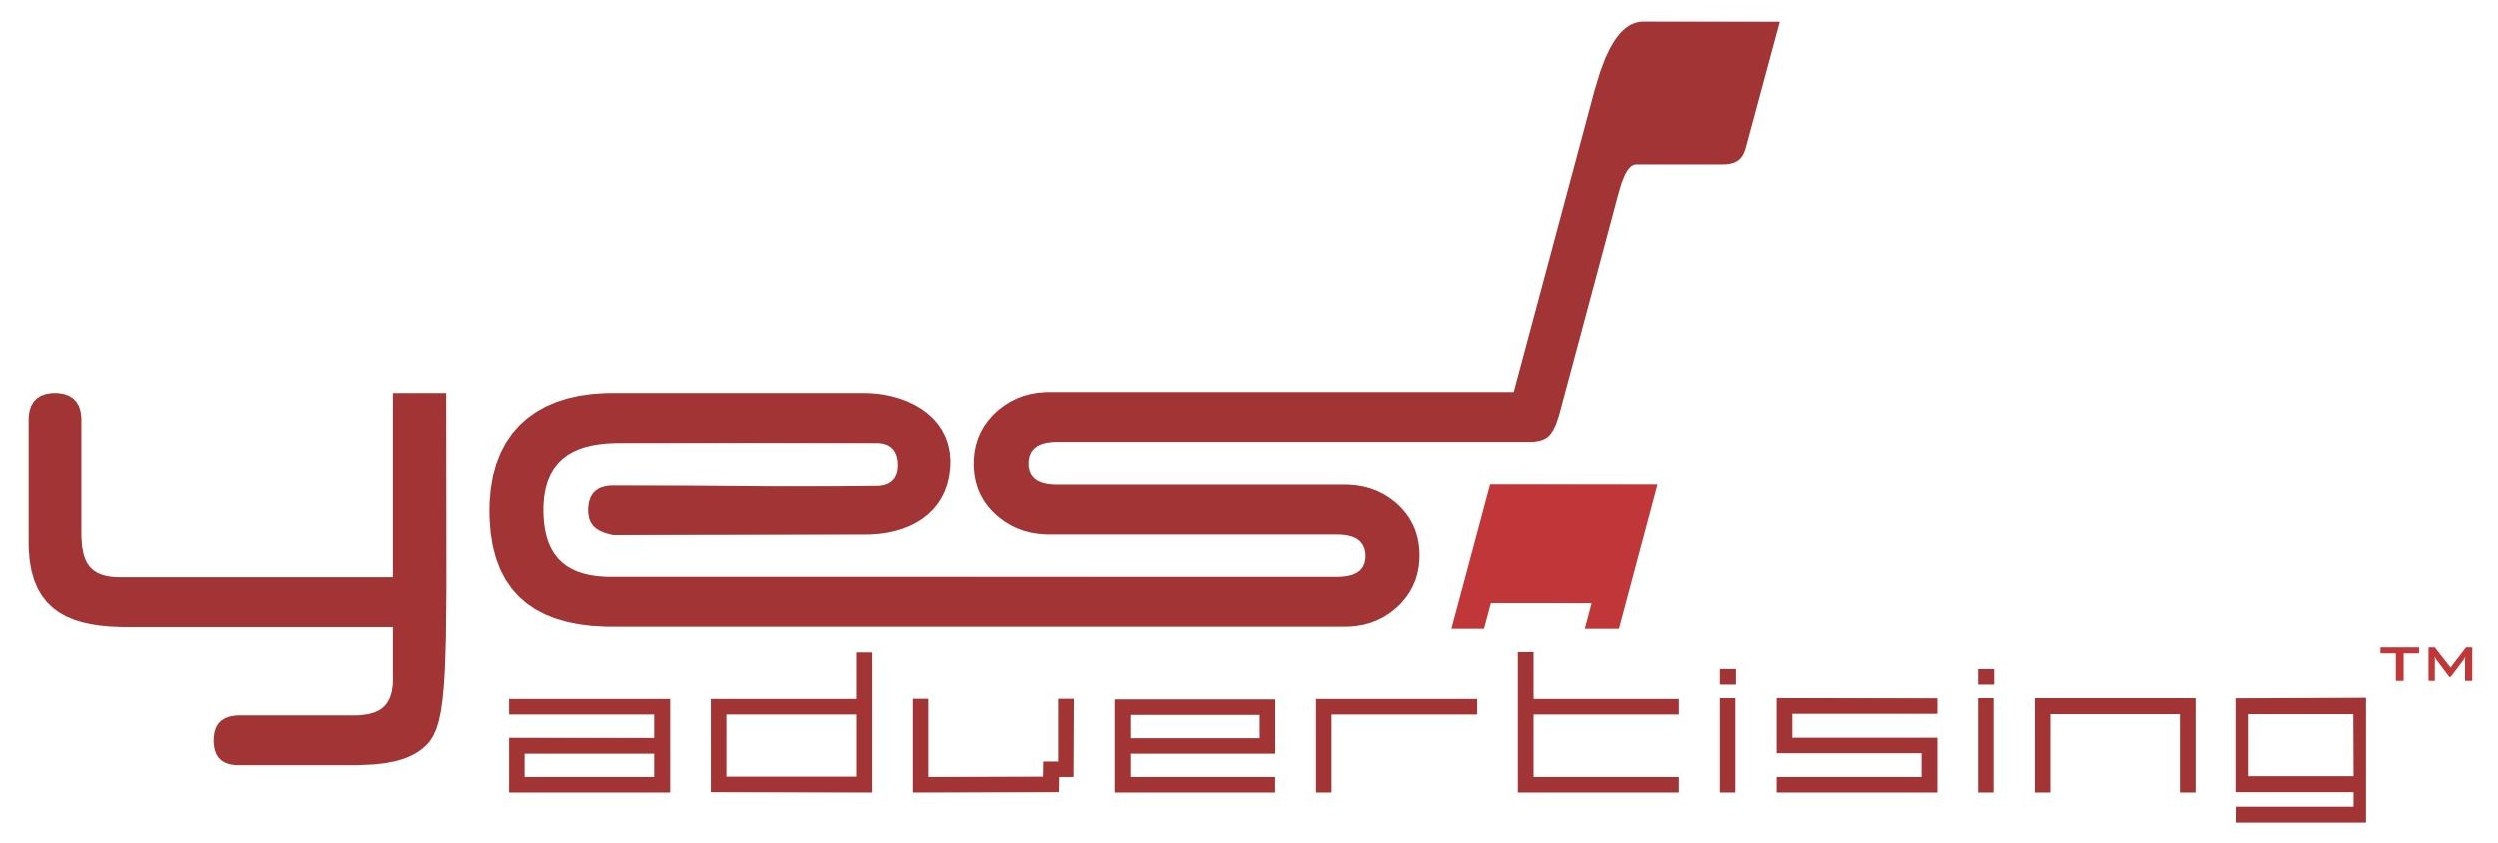 Yes advertising Logo [EPS File]